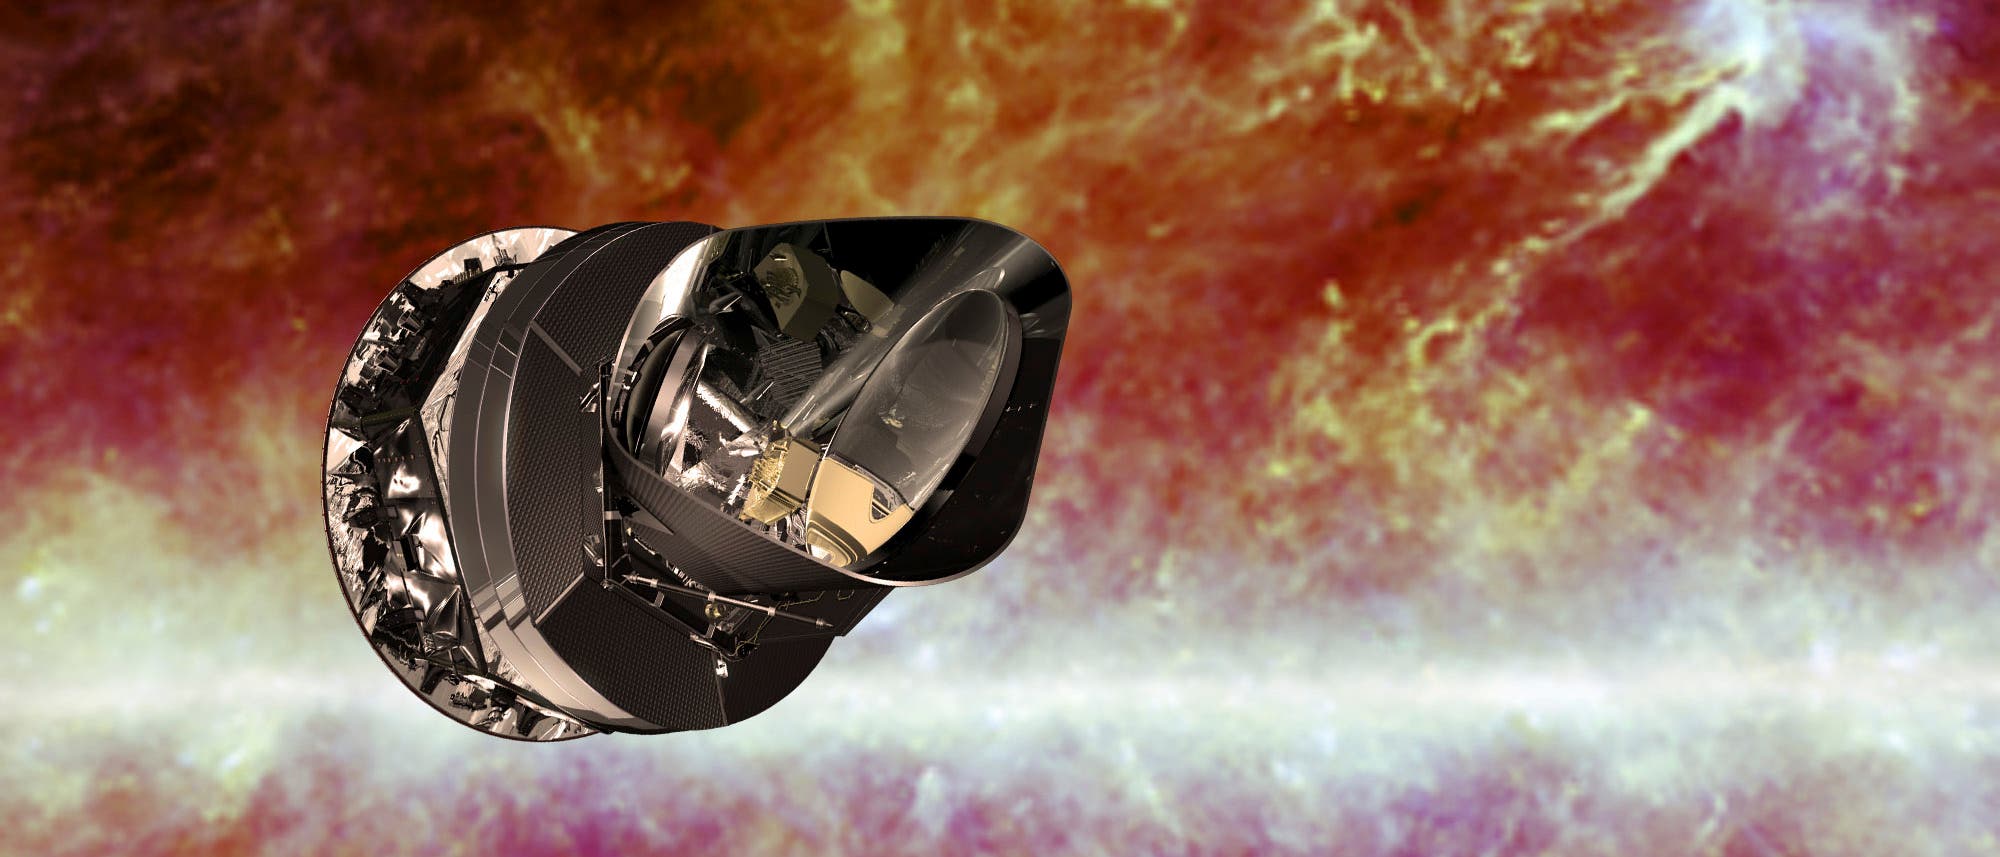 Das europäische Weltraumteleskop Planck